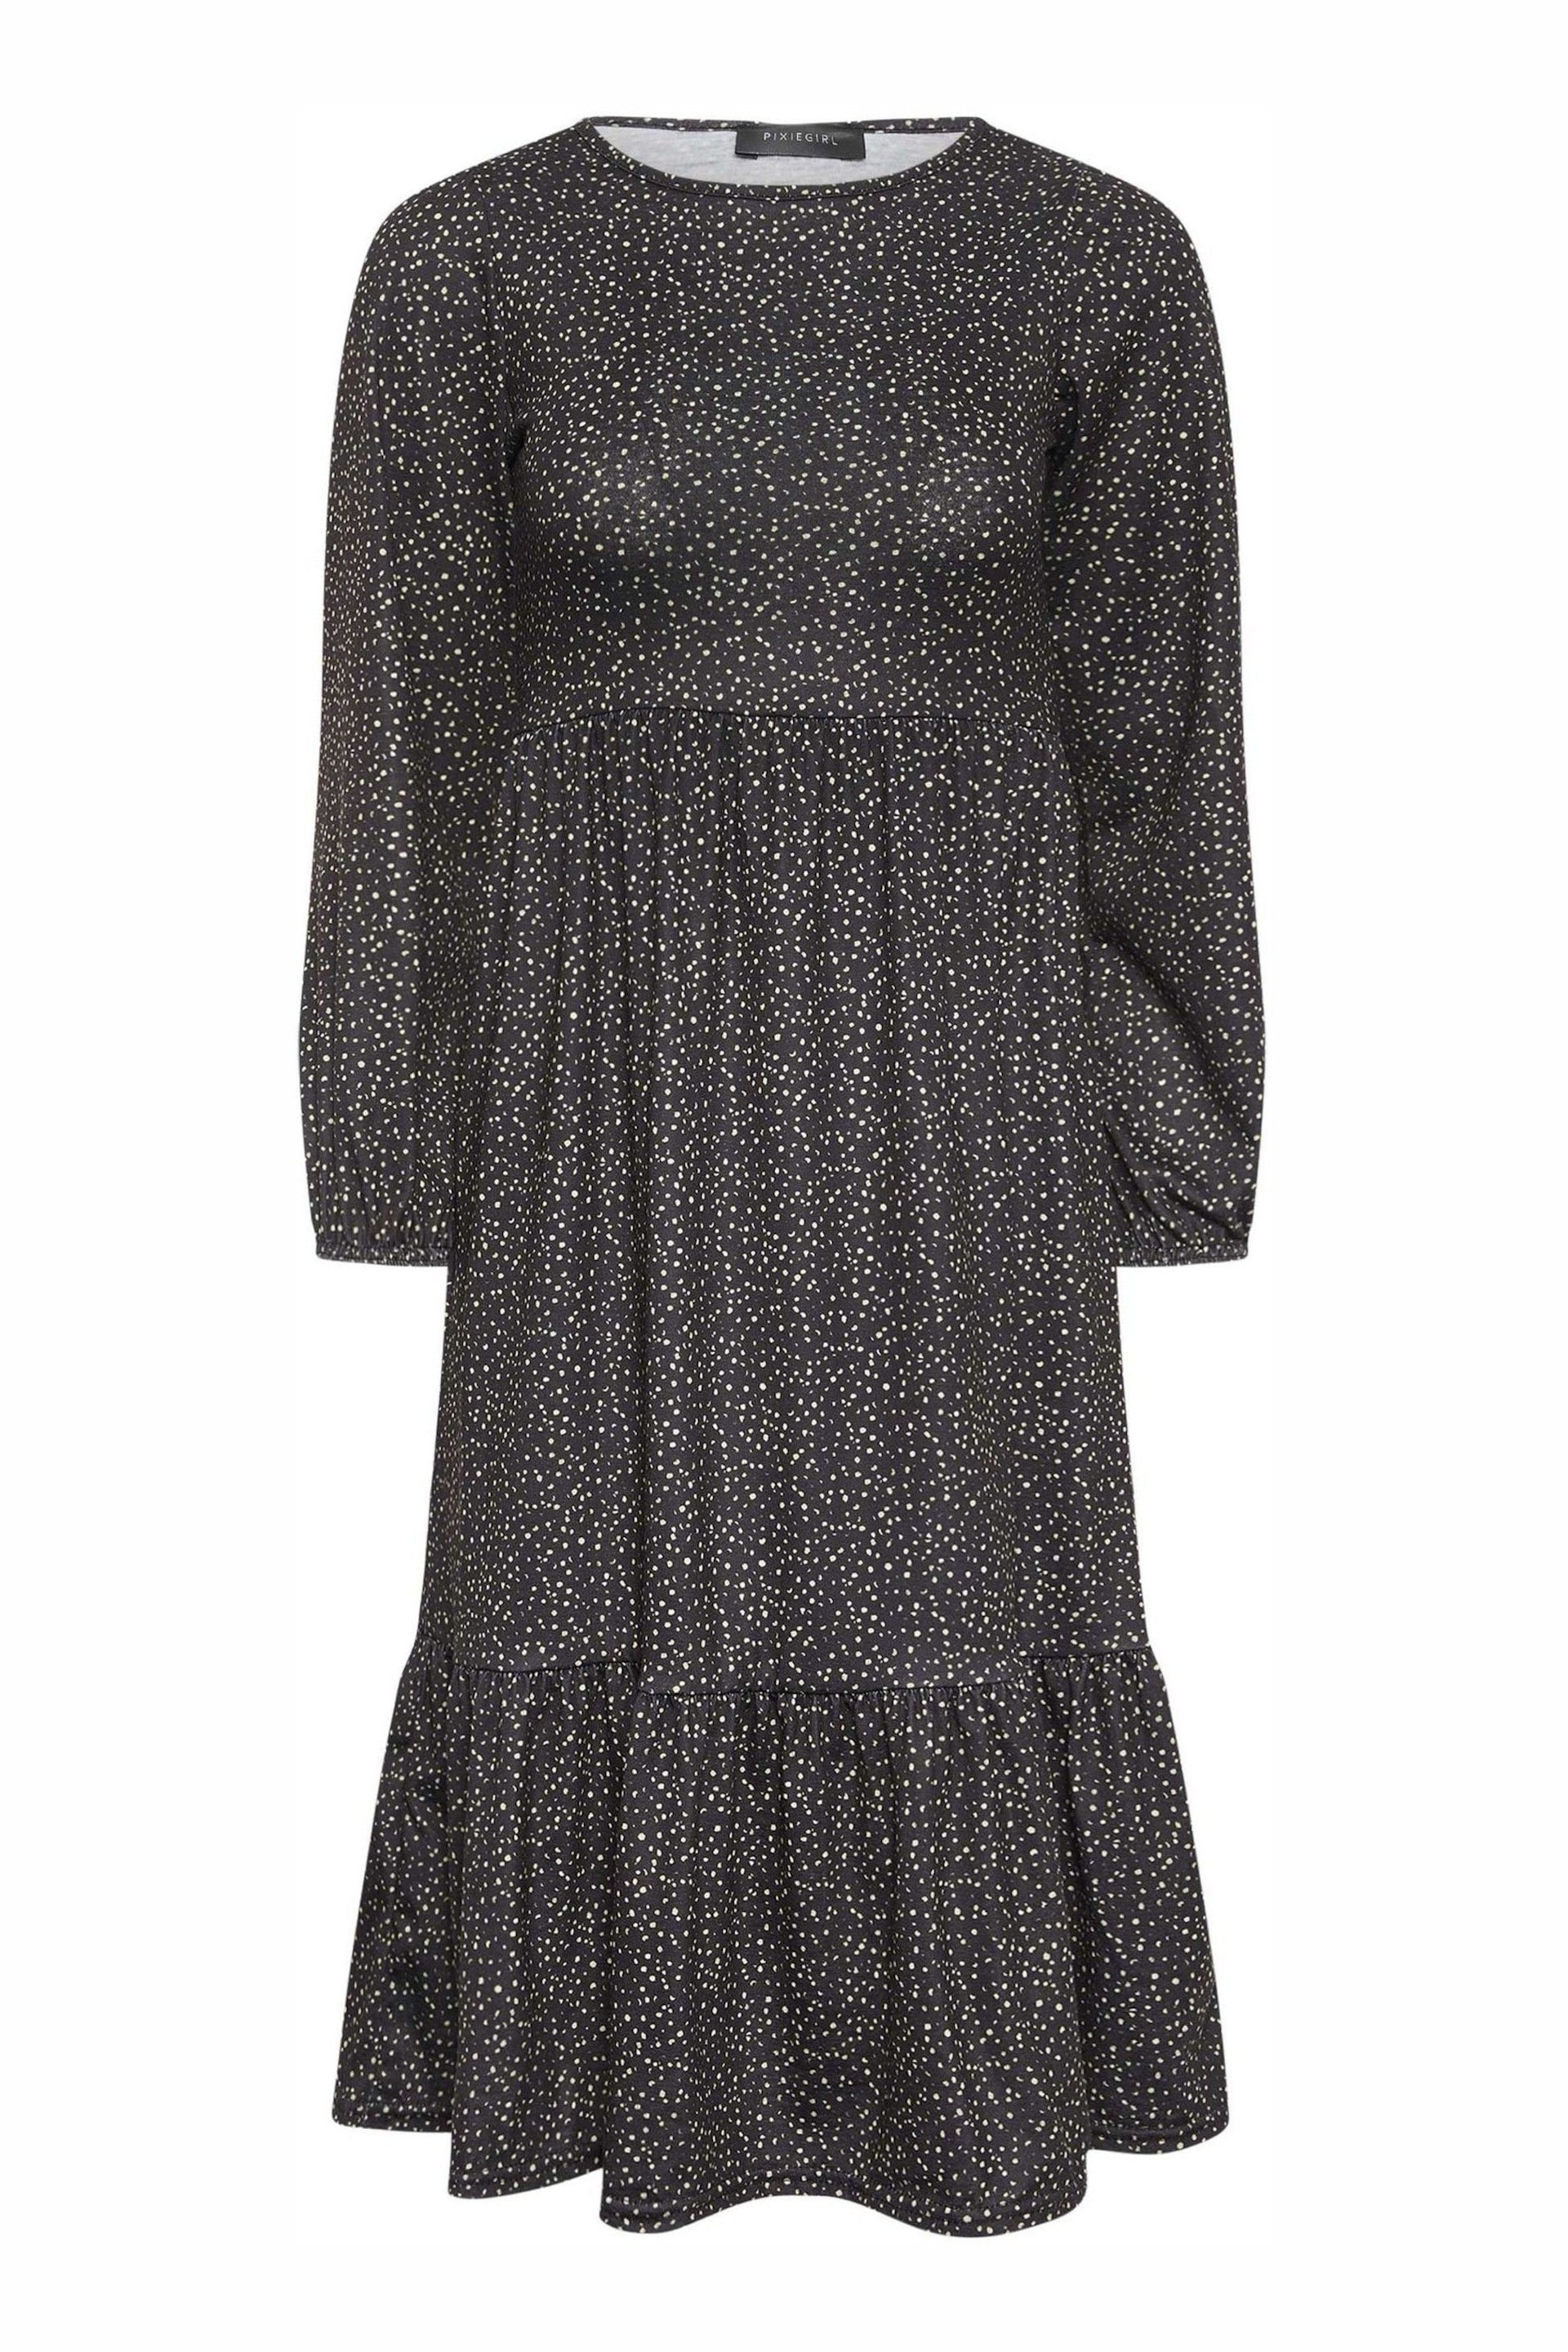 PixieGirl Petite Black Tiered Long Sleeve Midi Dress - Image 5 of 5